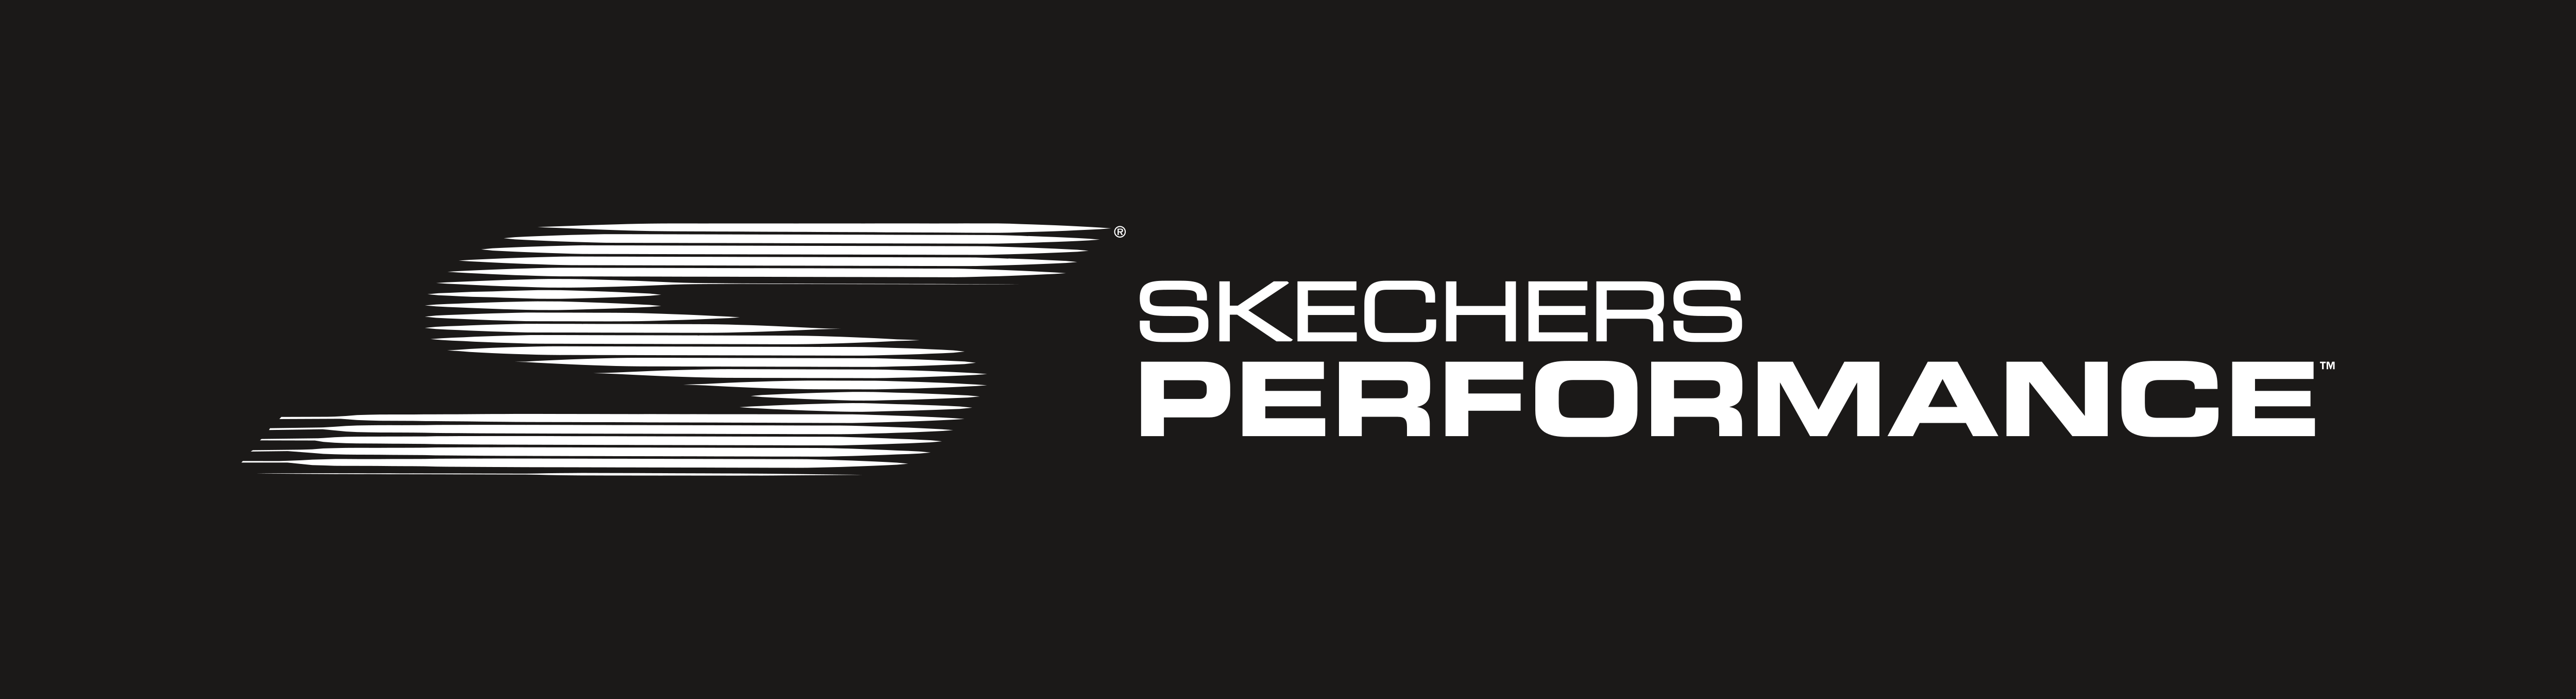 Skechers Performance  Logos Download